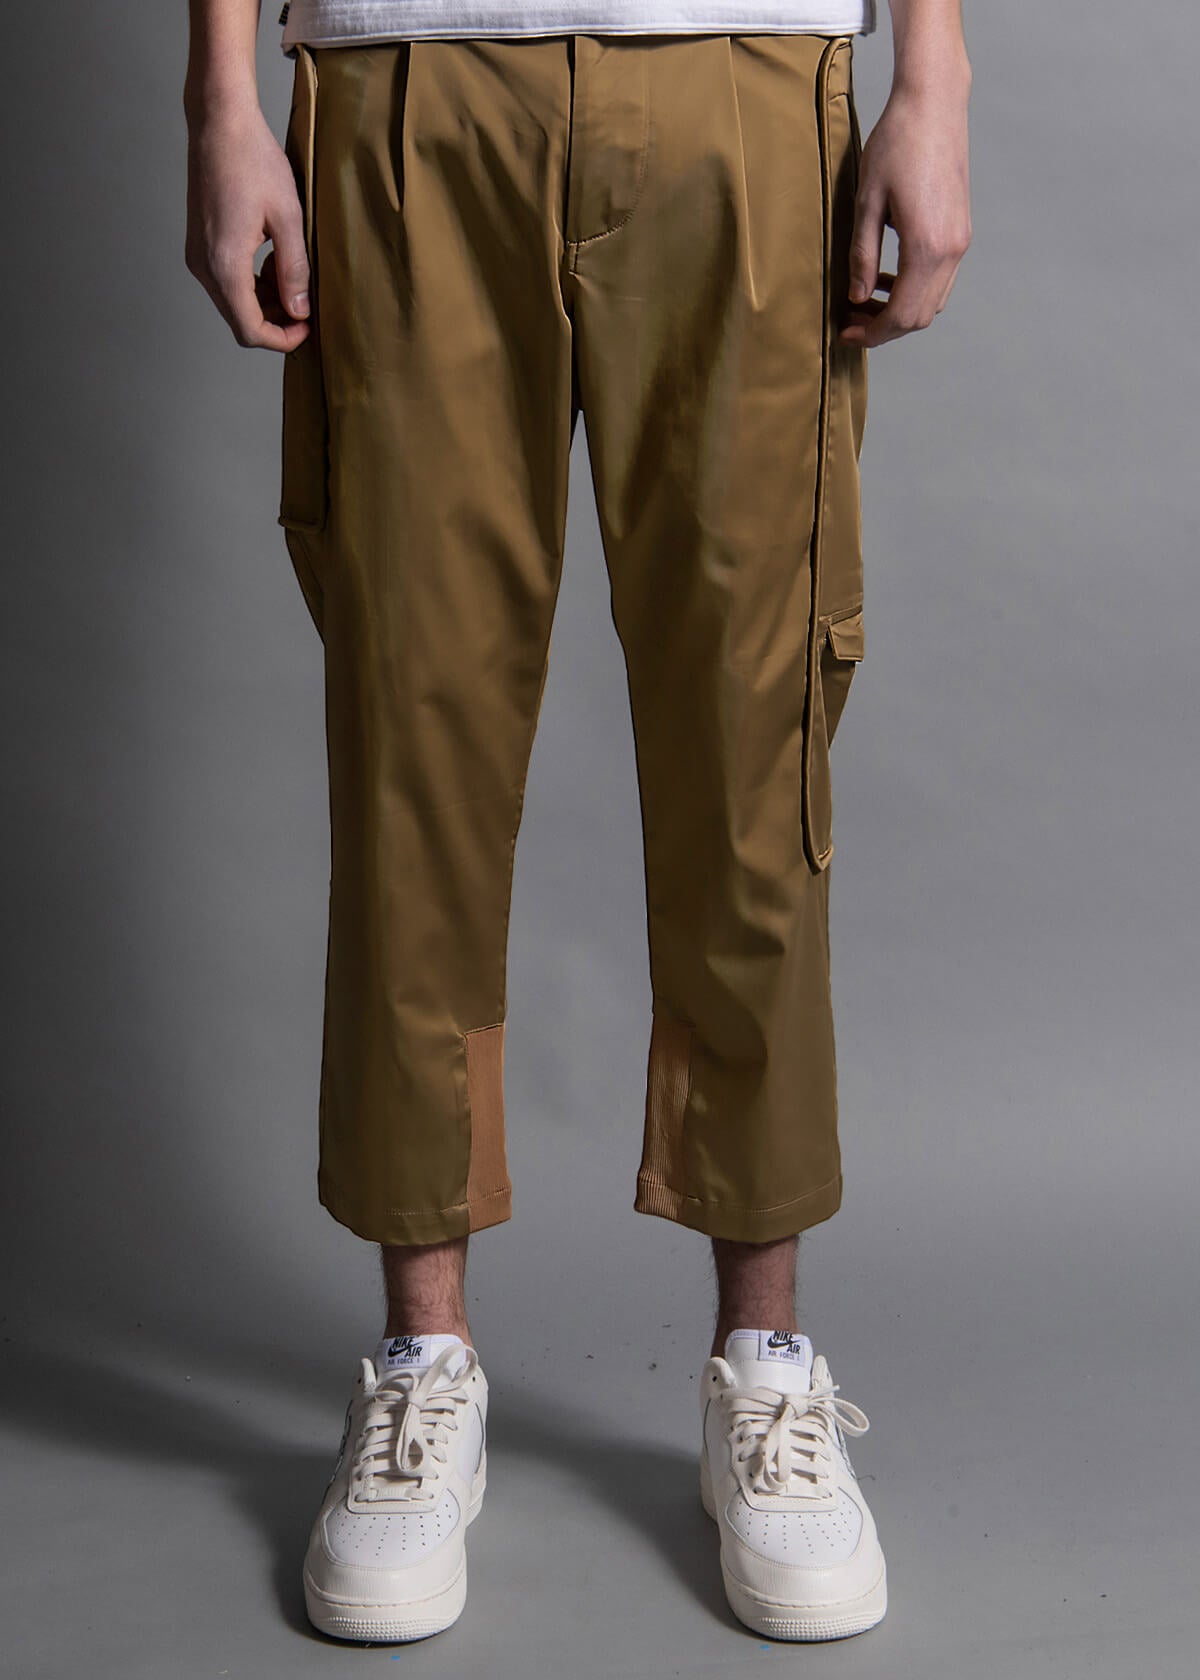 khaki cargo pants for men